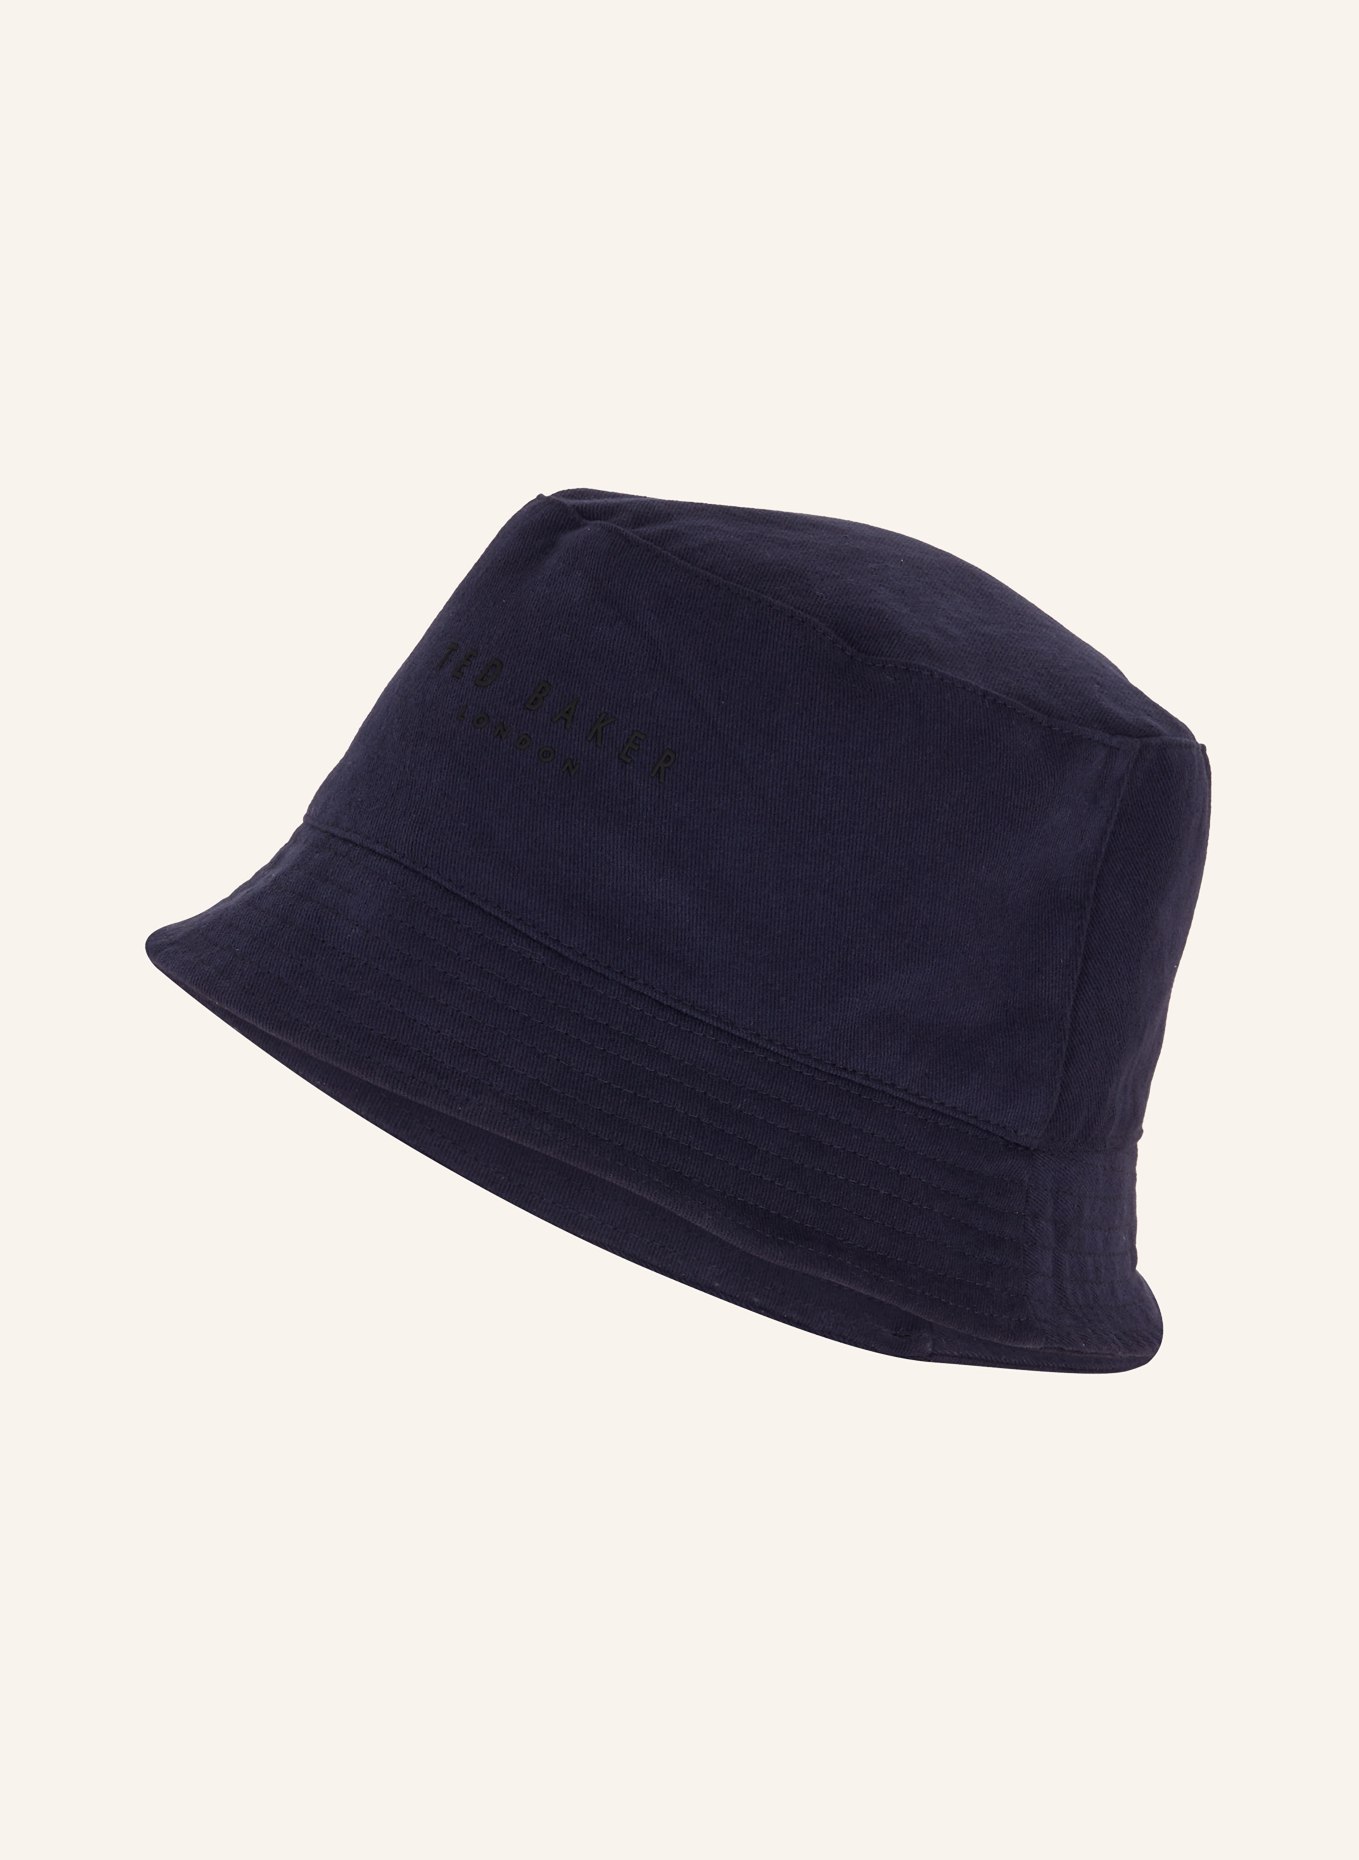 TED BAKER Bucket-Hat BENNJIE, Farbe: DUNKELBLAU (Bild 1)